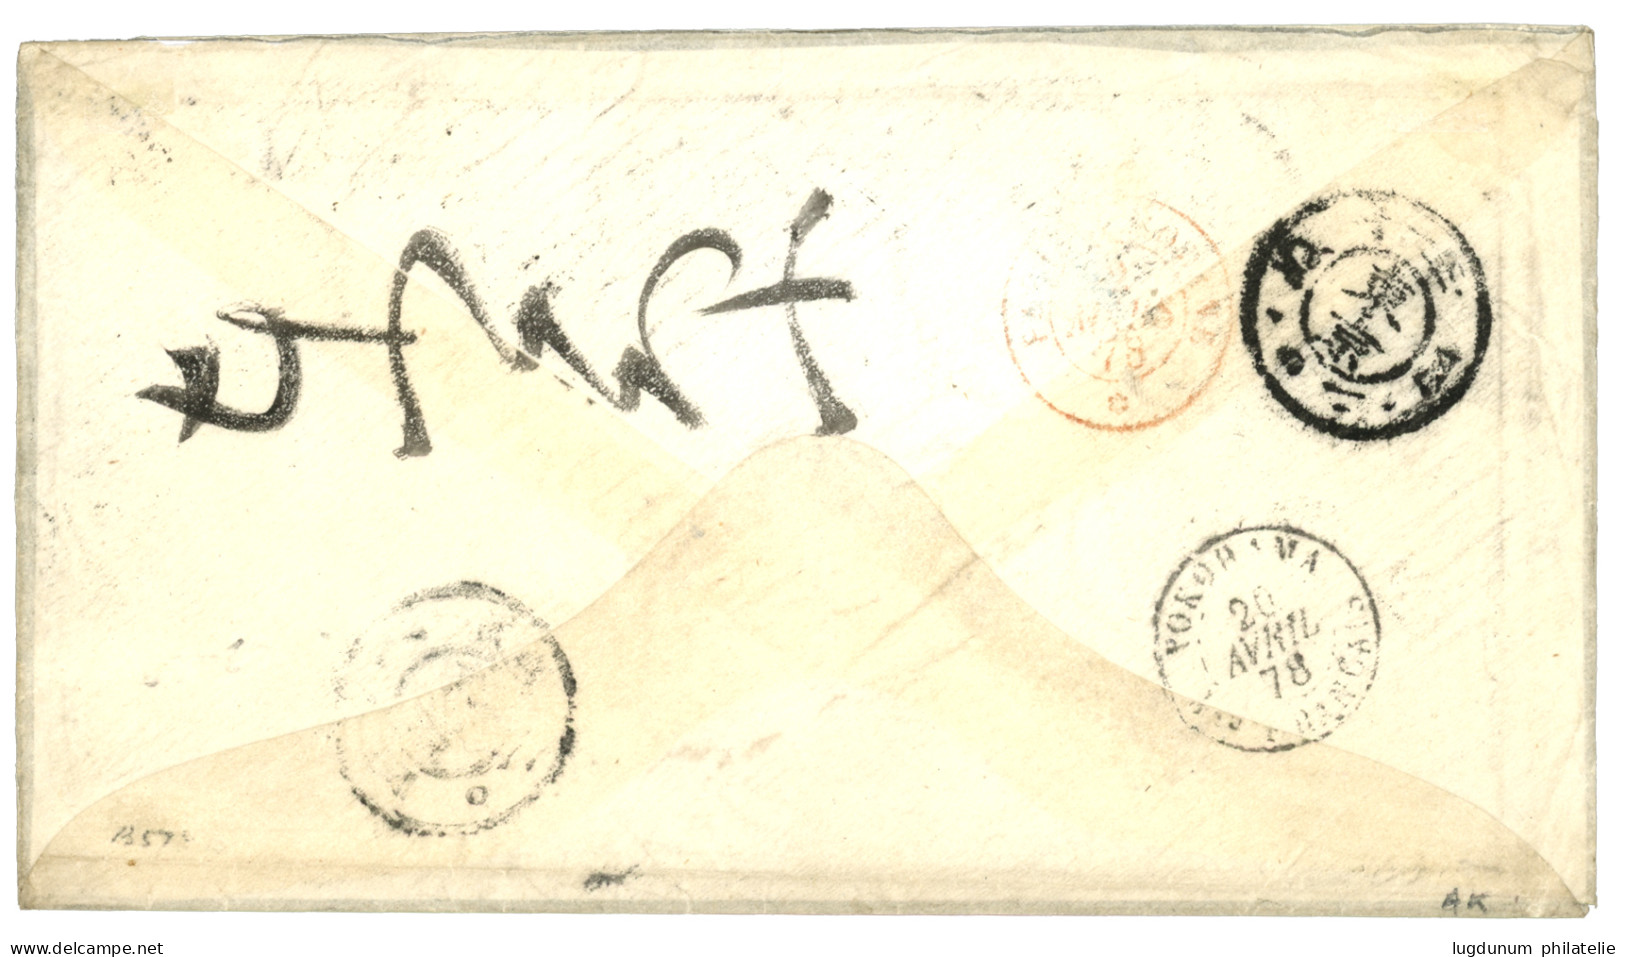 1873 40c Siège (n°38)x2 Obl. T.17 HYERES + YOKOHAMA PAID ALL Rouge Sur Enveloppe VIA BRINDISI Pour YOKOHAMA (JAPON). TTB - 1849-1876: Classic Period